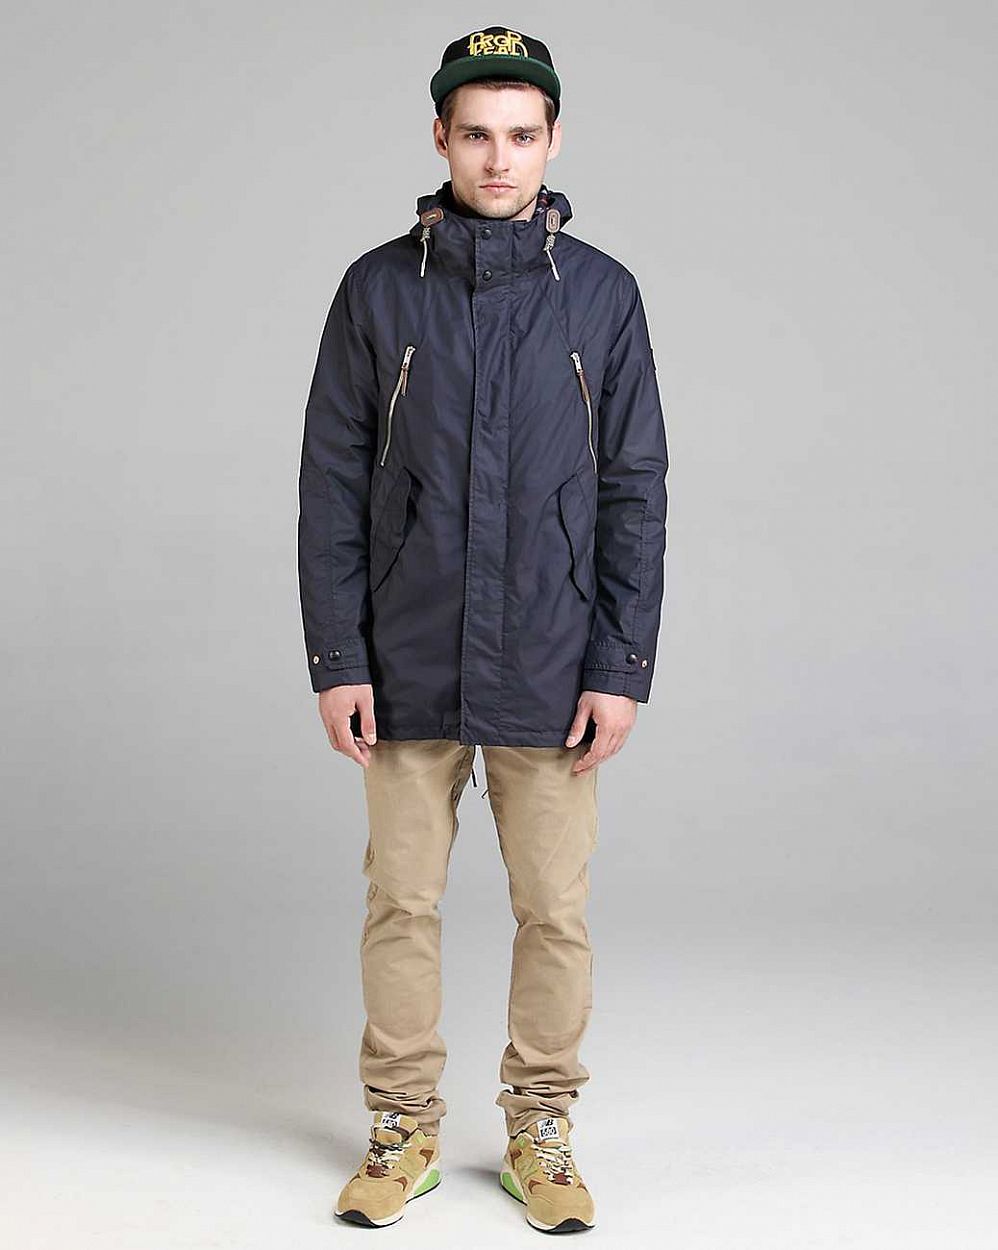 Куртка-Парка Loading Garments Supply Jacket 2406 navy отзывы